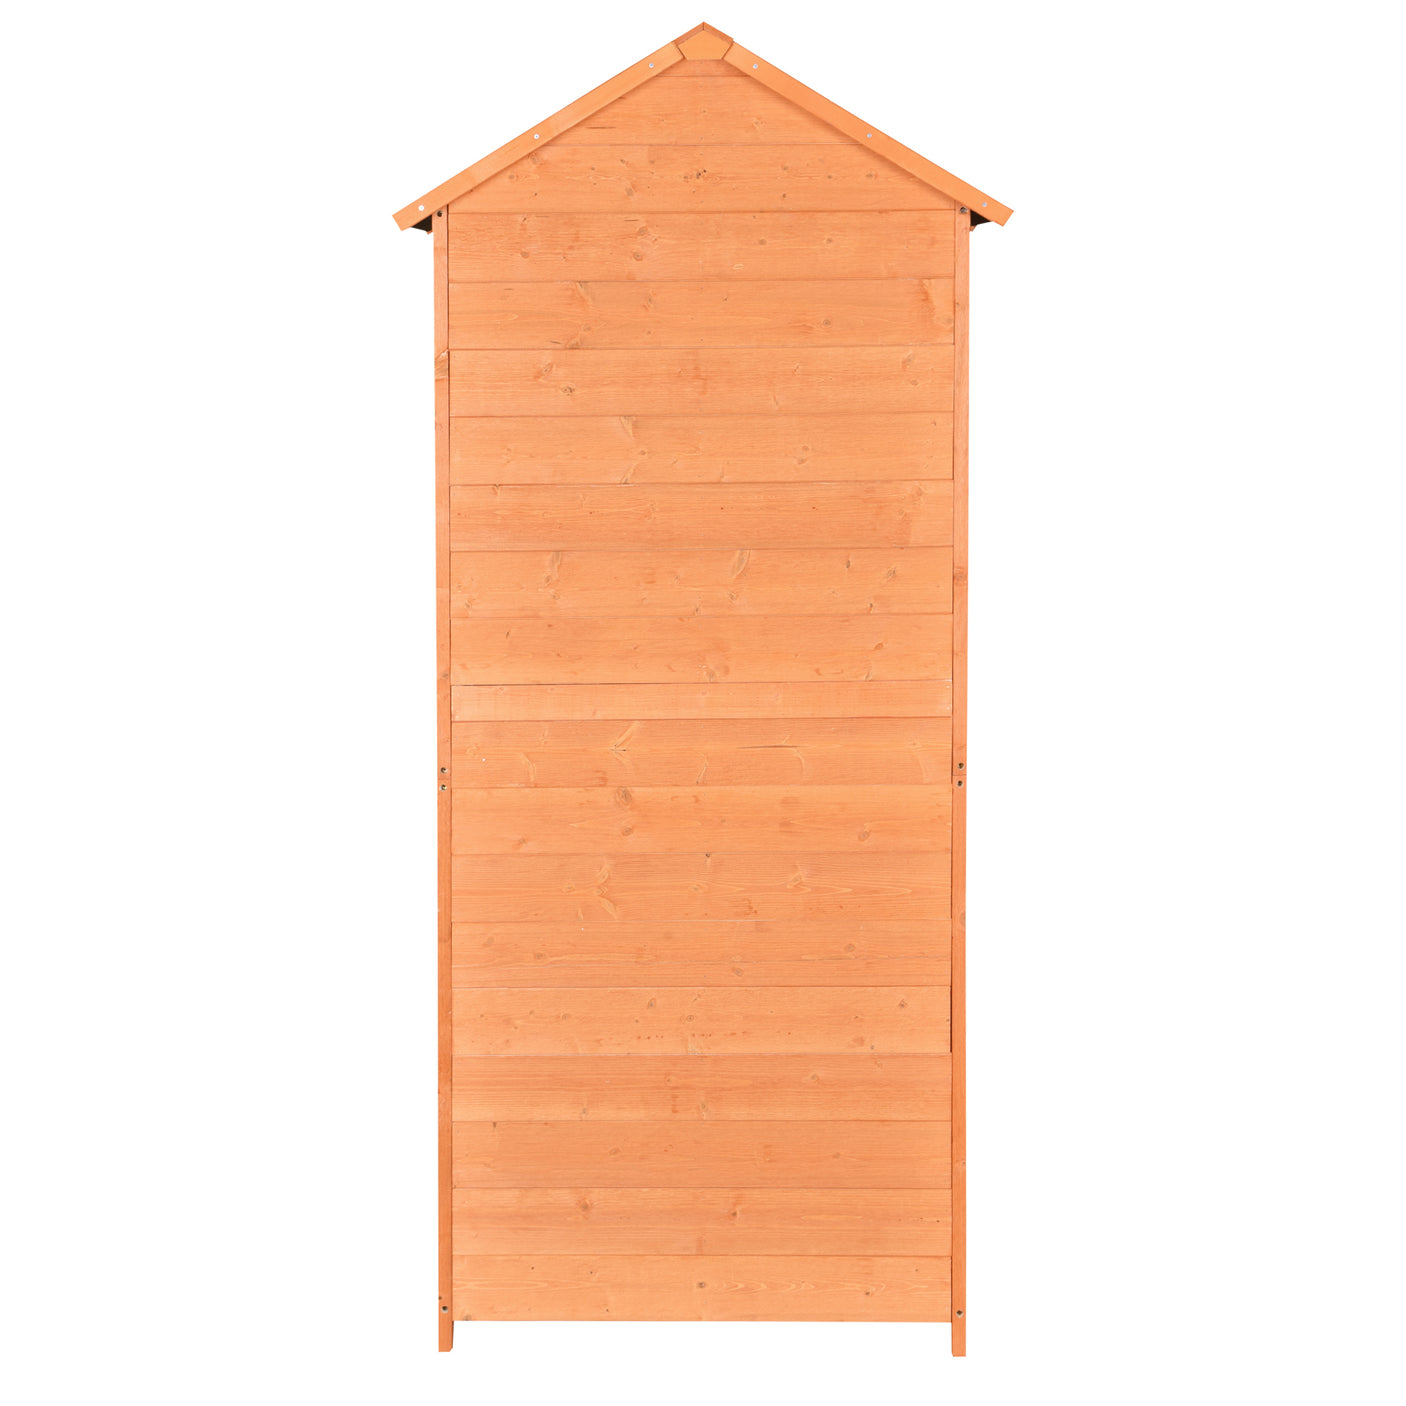 Outdoor Storage Shed - Wood Garden Storage Cabinet - Waterproof Tool Storage Cabinet with Lockable Doors for Garden, Patio, Backyard, Backyard, Patio, Lawn, Meadow, Farmland